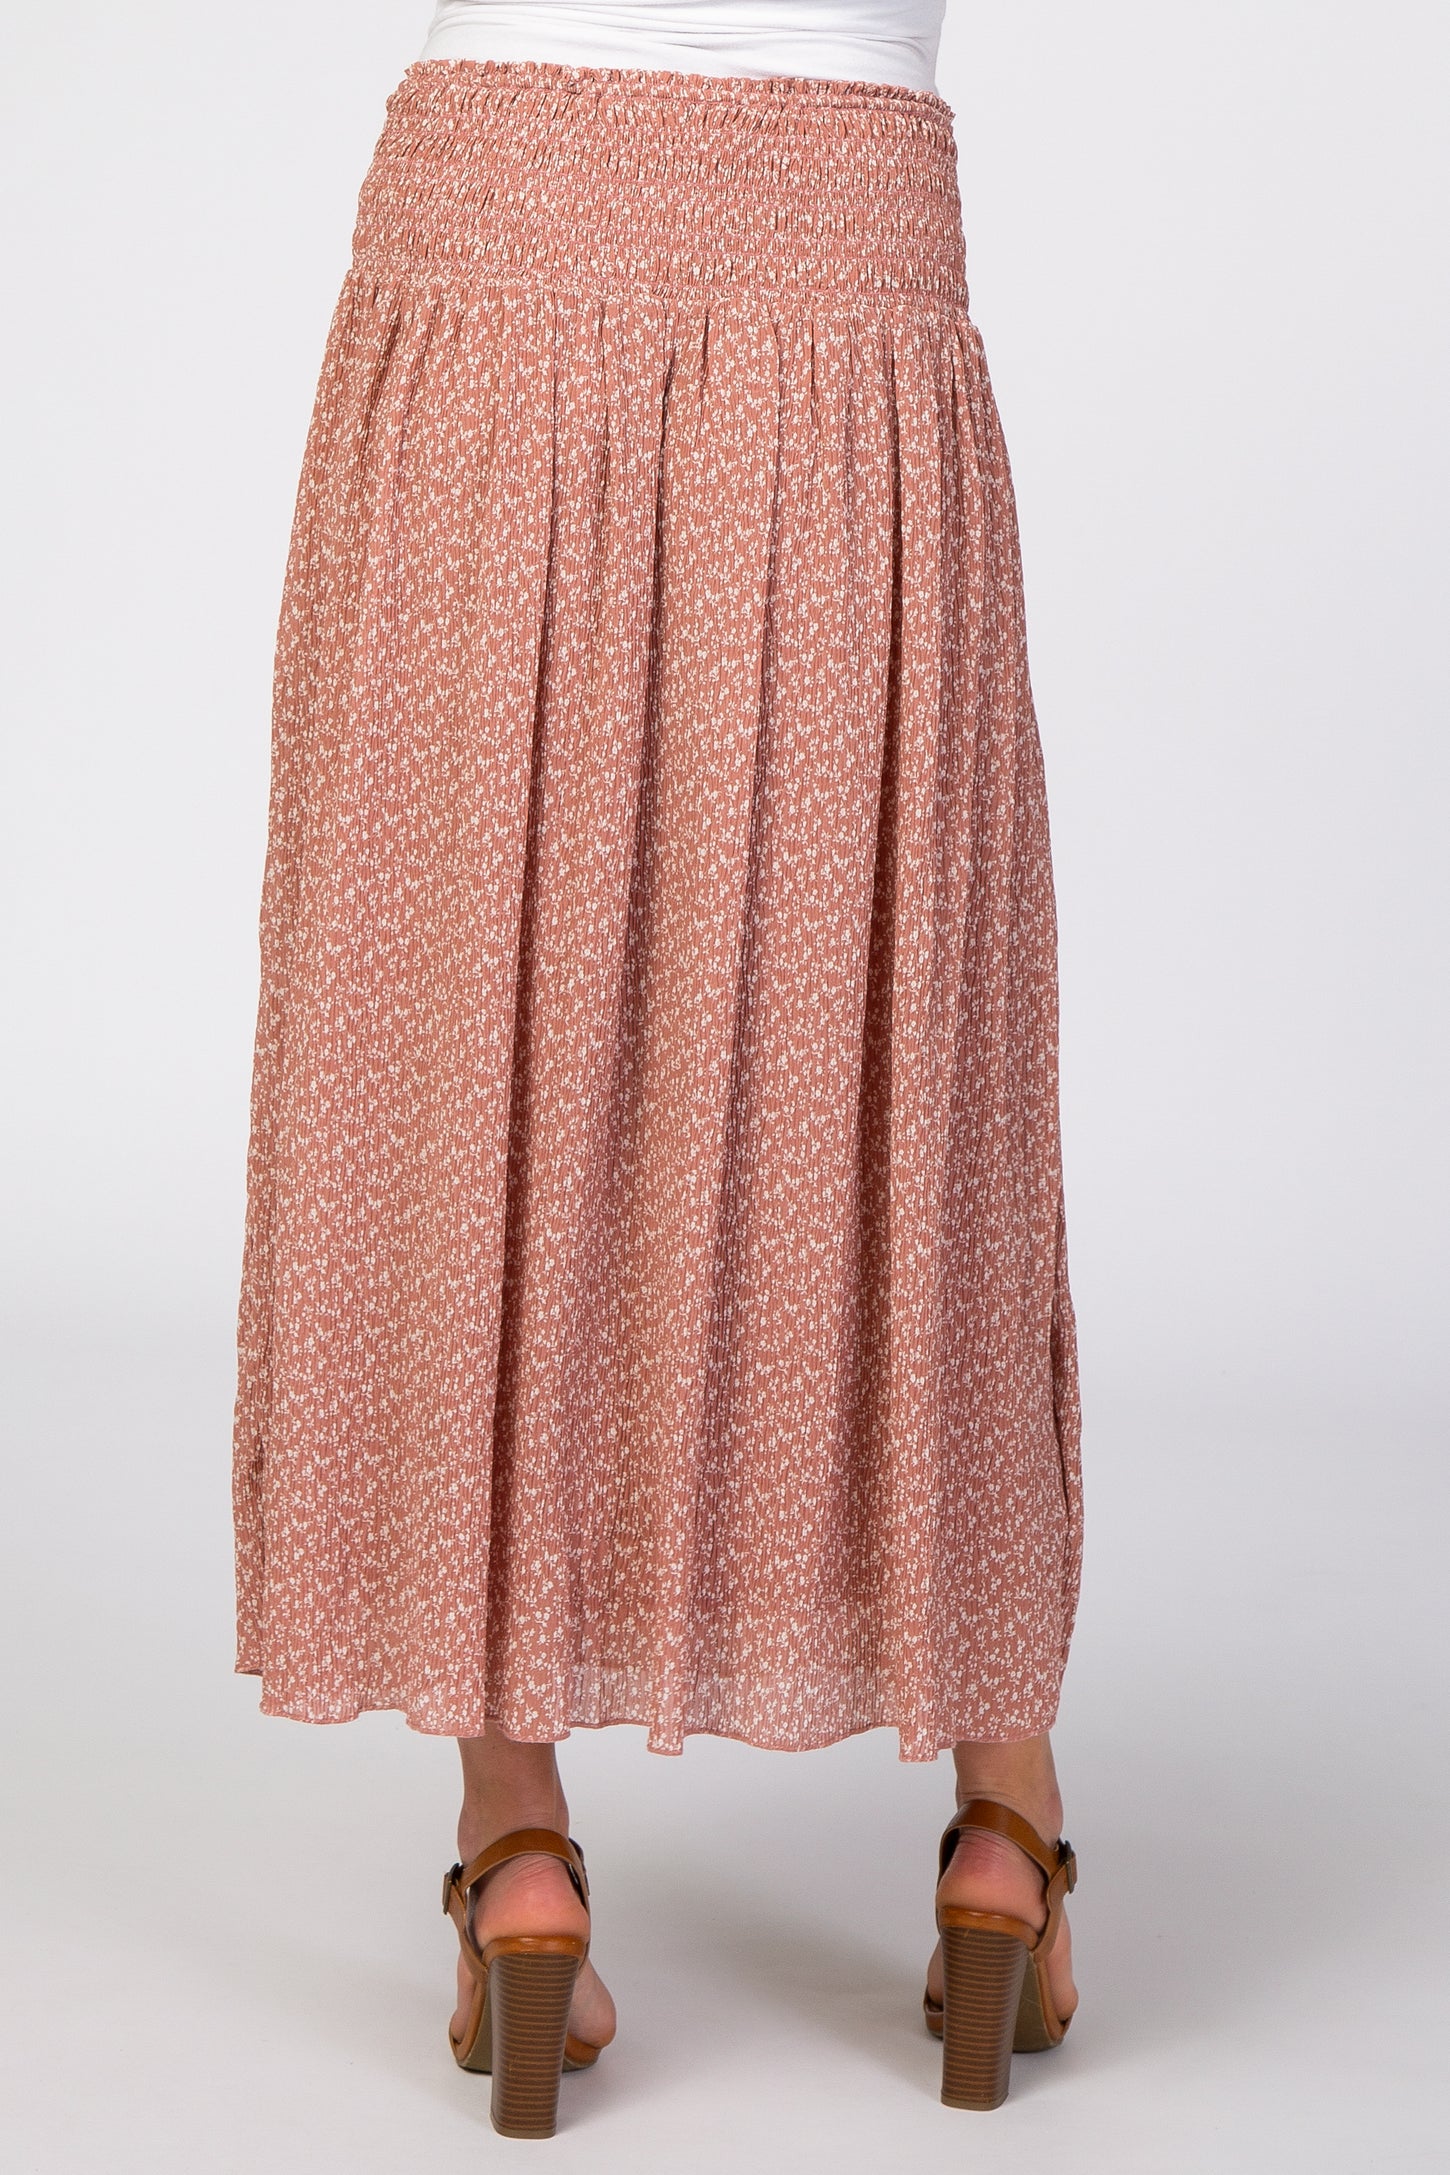 Mauve Floral Chiffon Smocked Elastic Waist Maternity Midi Skirt